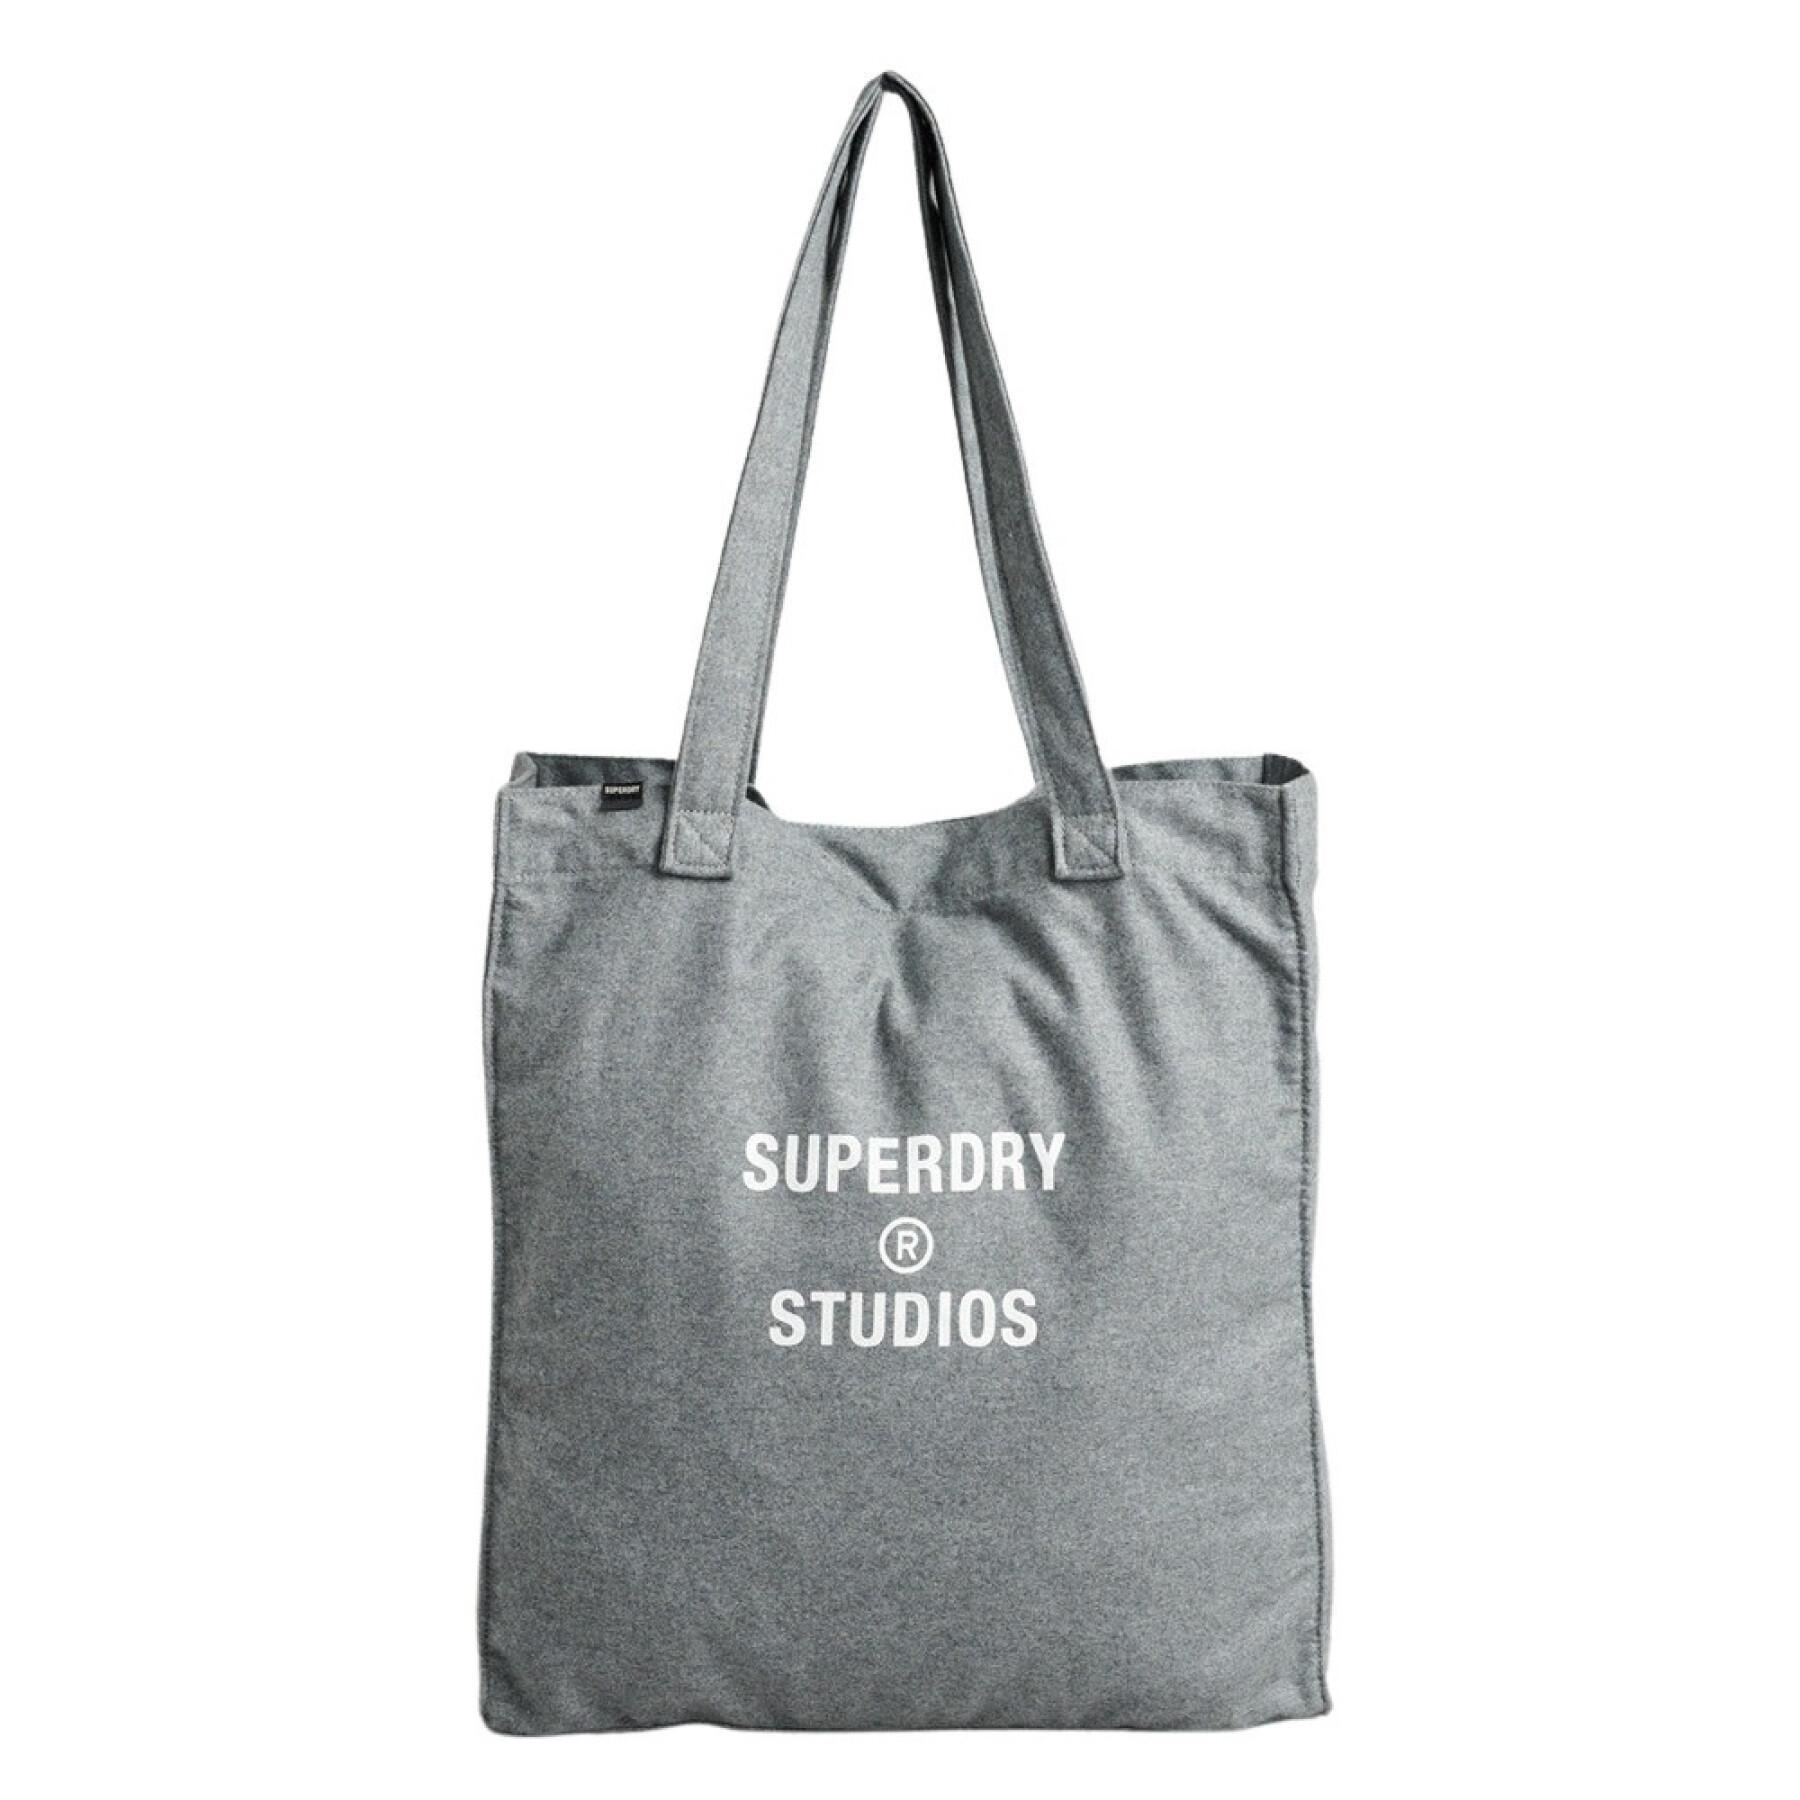 Tote bag Superdry Studio